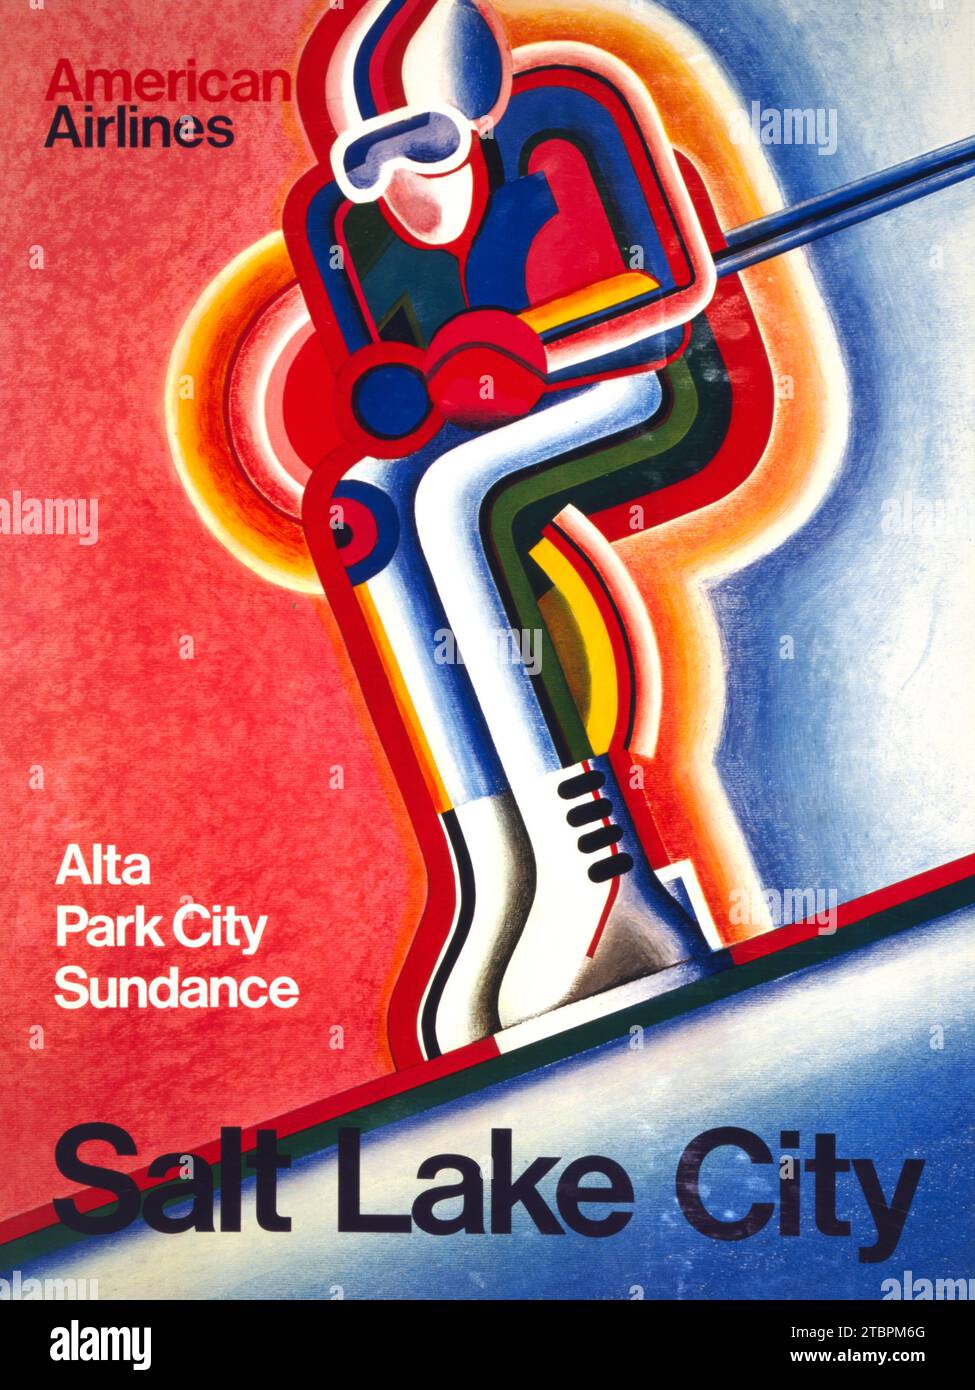 Vintage american winter sport travel poster - American Airlines - Alta Park City Sundance - Salt Lake City 1969 Stock Photo